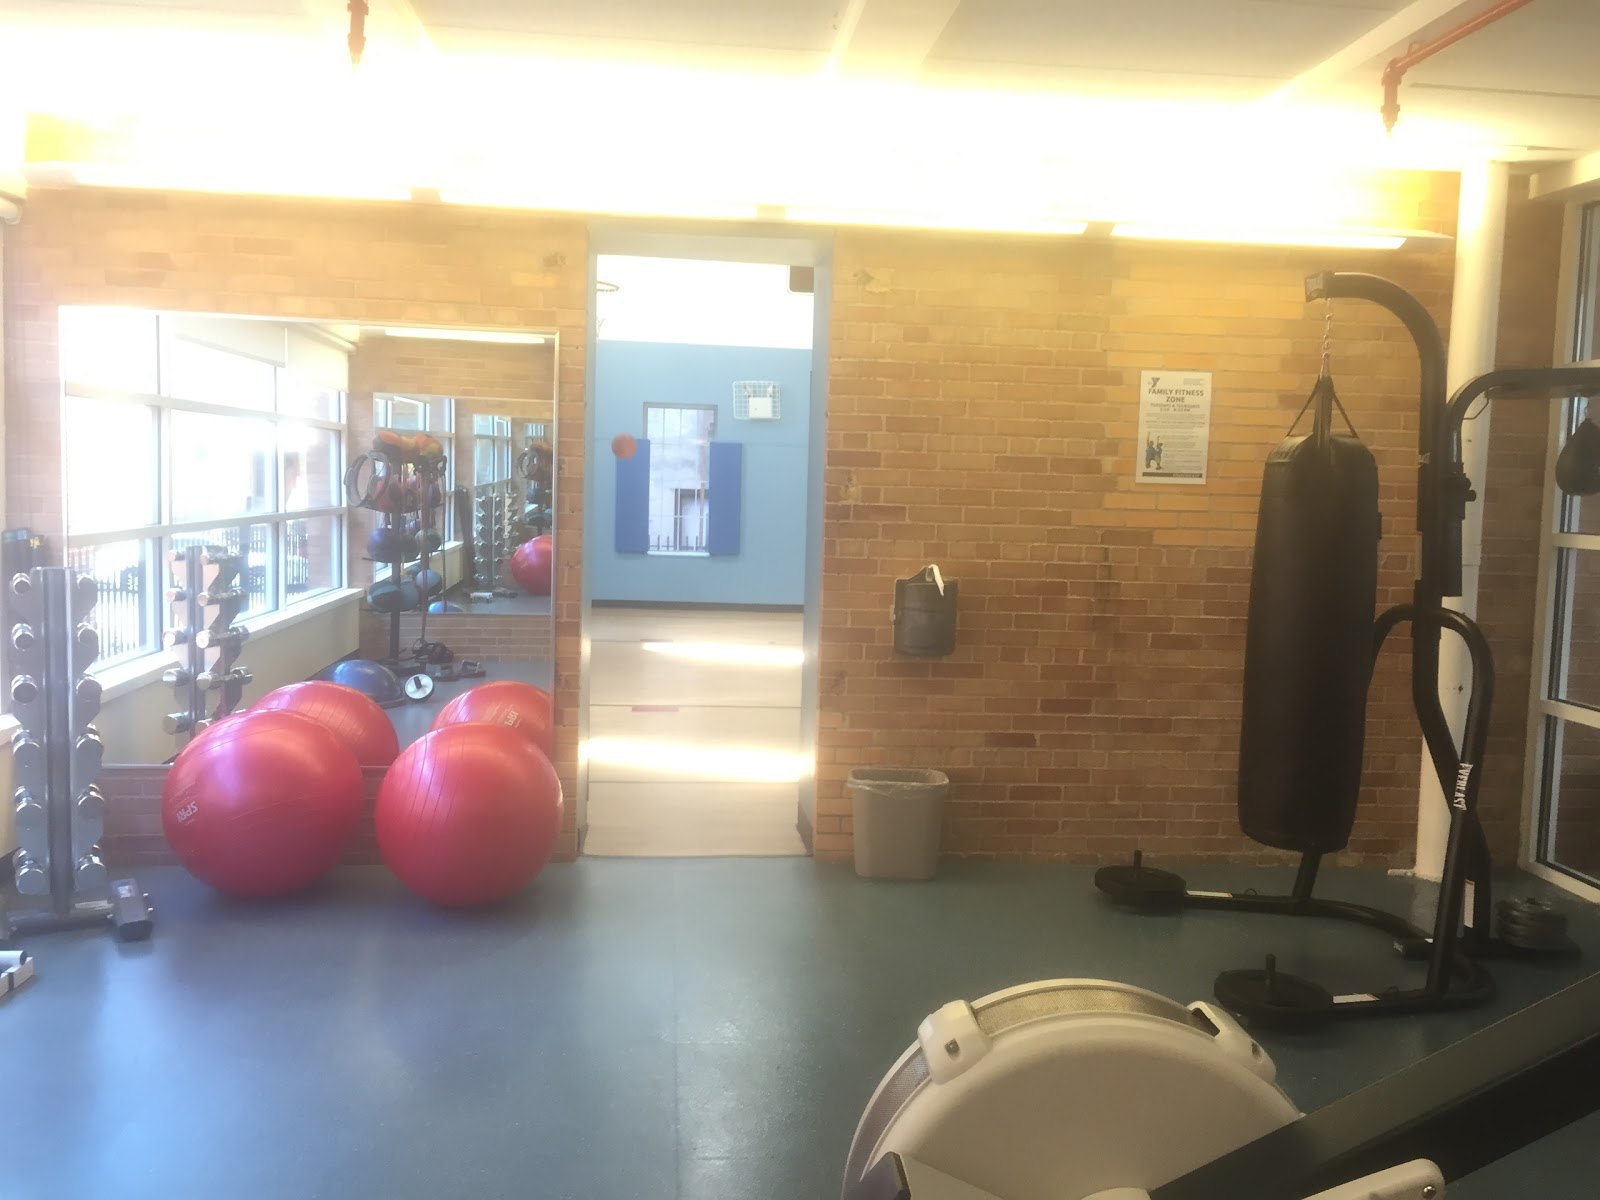 Photo of Ridgewood YMCA in Ridgewood City, New York, United States - 2 Picture of Point of interest, Establishment, Health, Gym